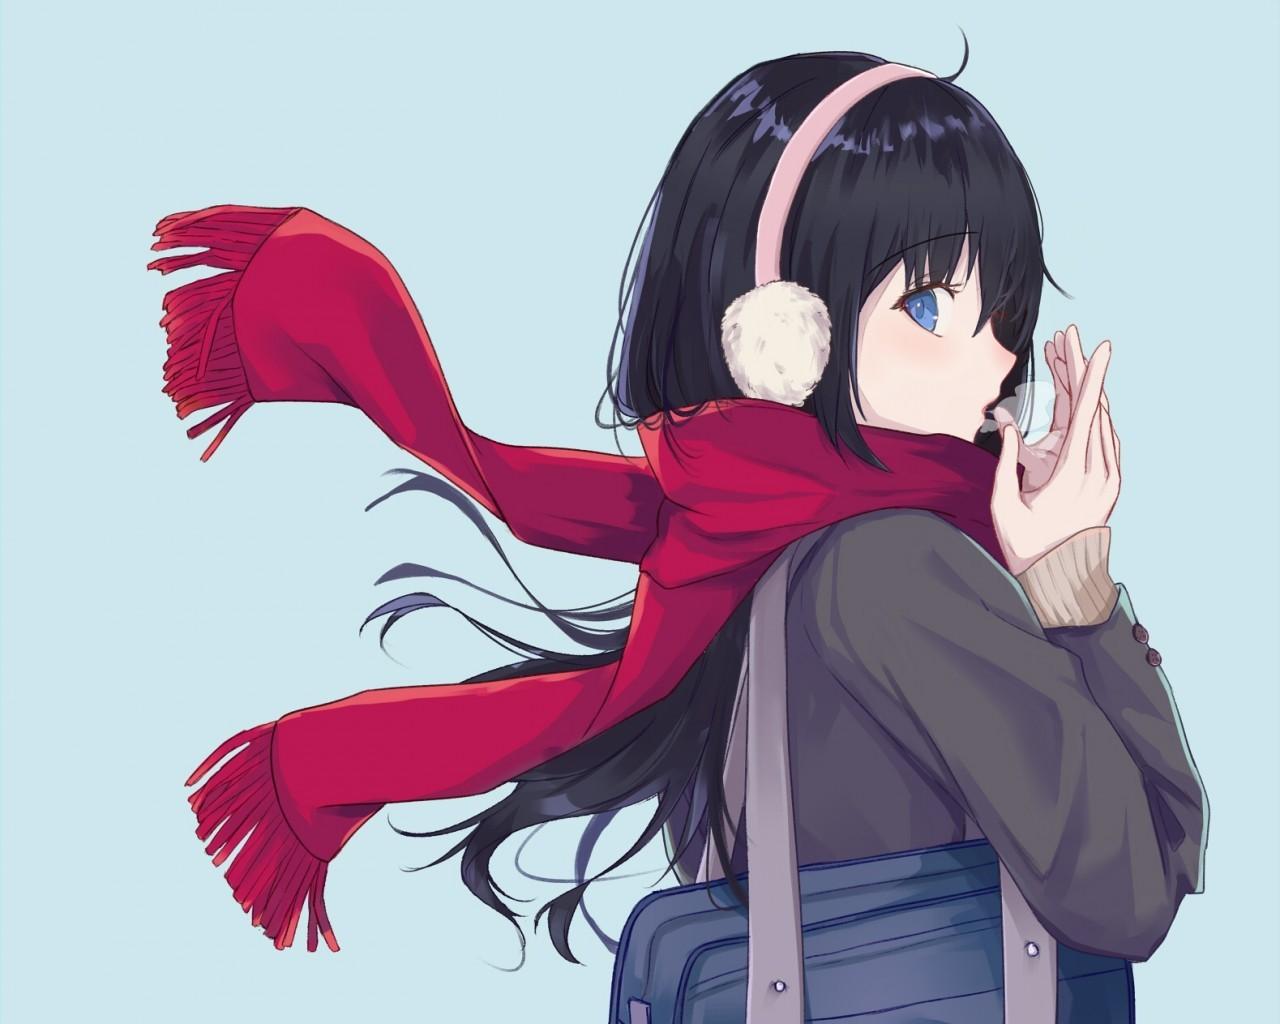 Line Art Anime girl Side View by 0AlphaCentauri0 on DeviantArt